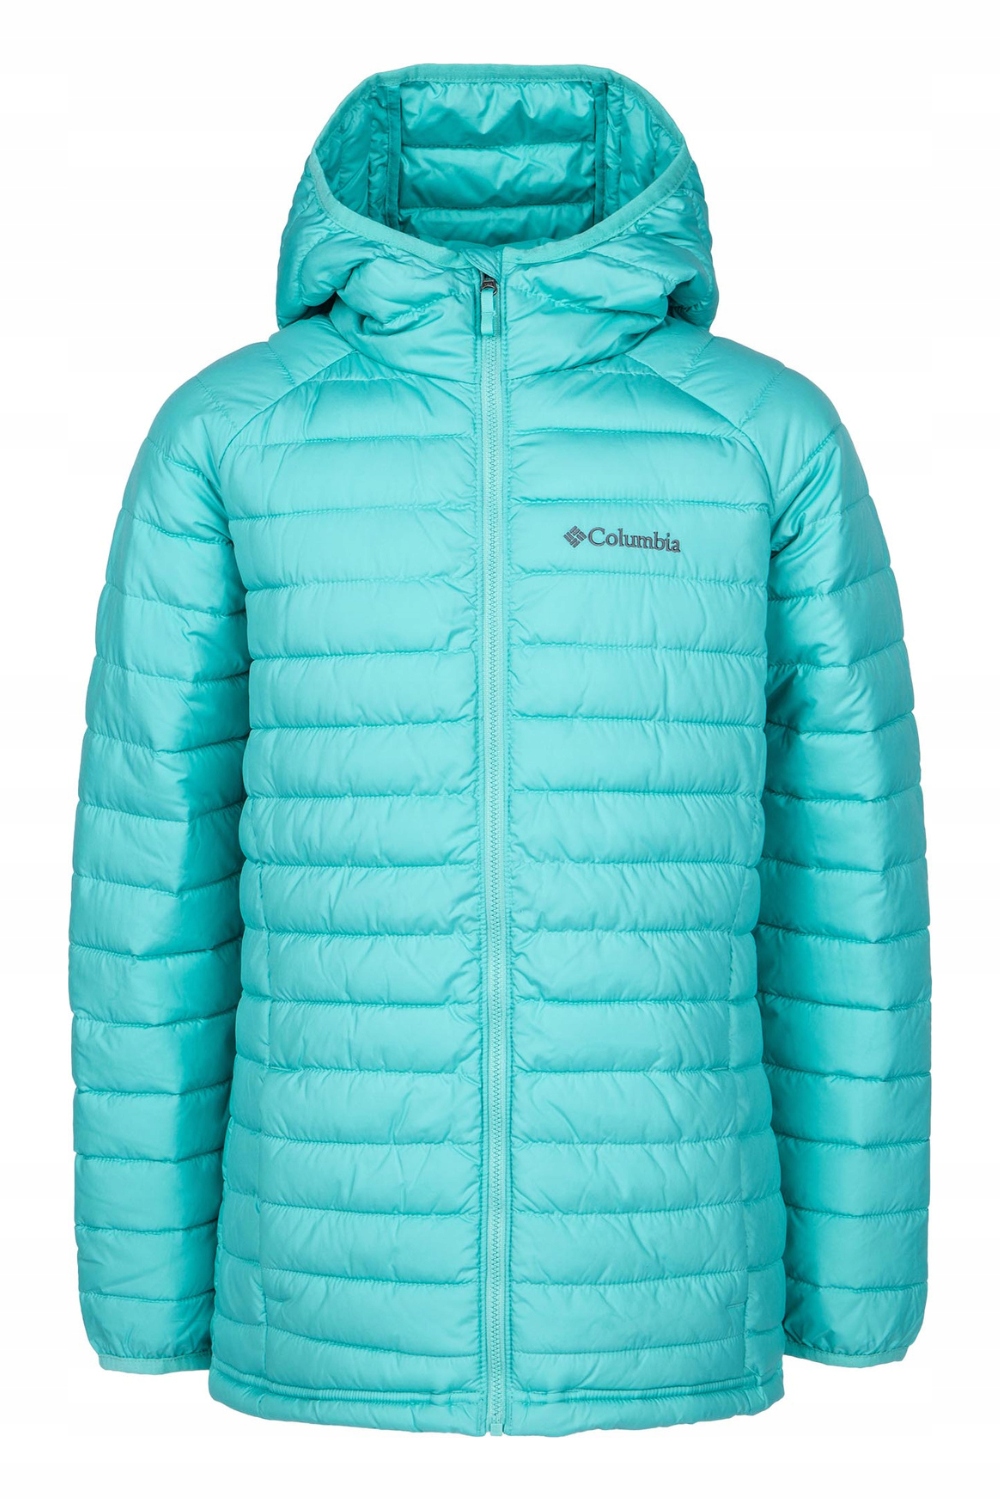 COLUMBIA dievčenská ľahká teplá páperová bunda s kapucňou zateplená veľ. XL